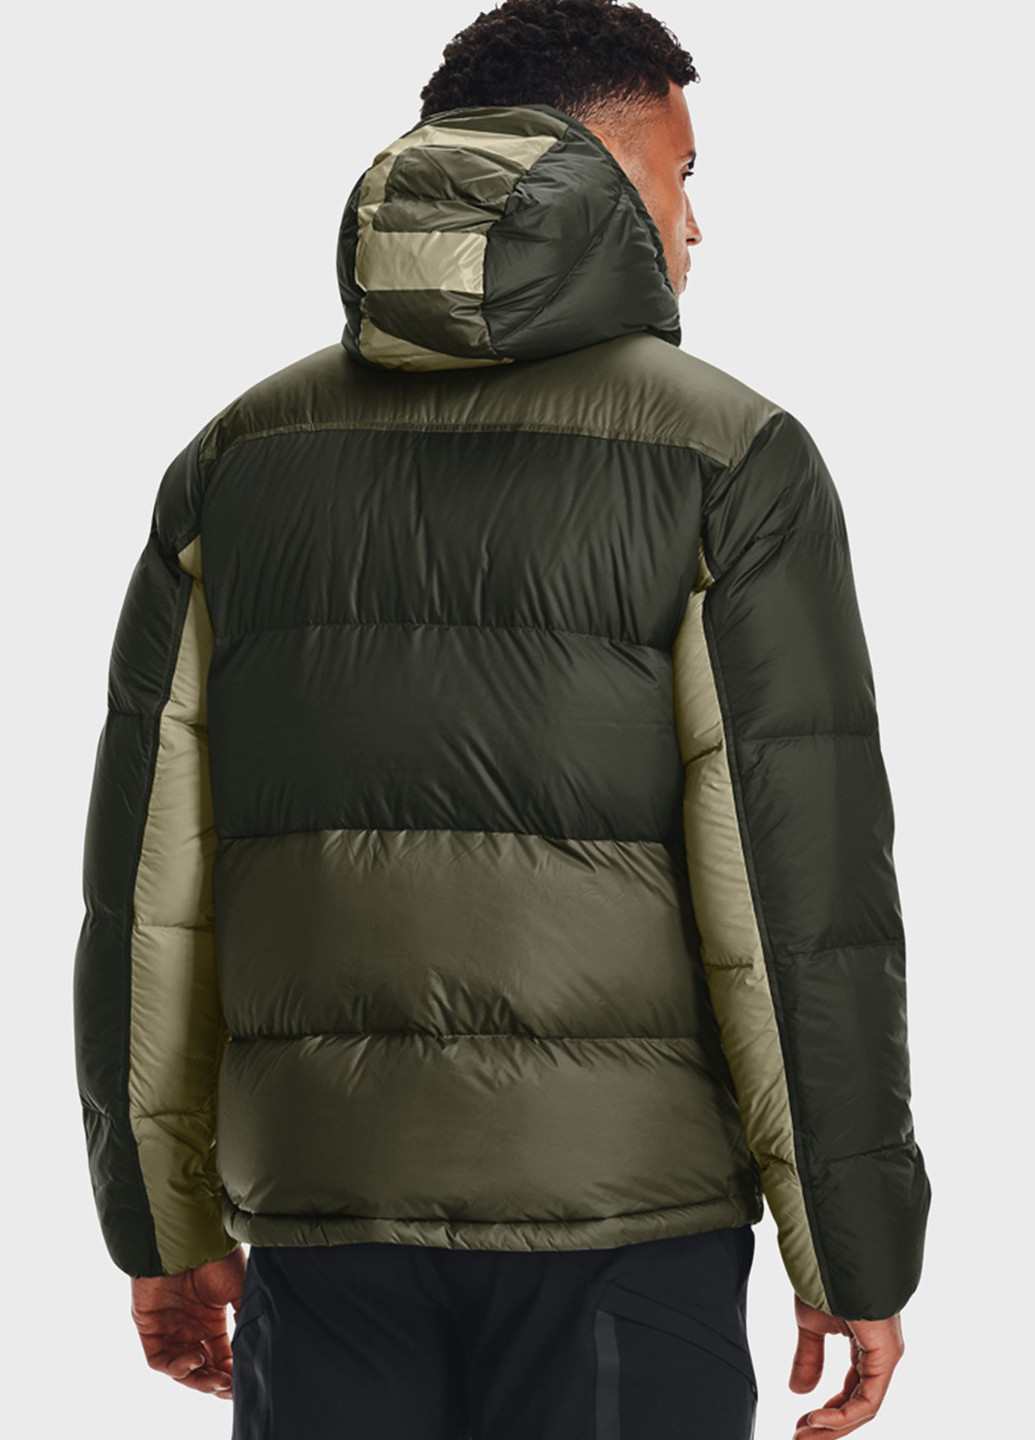 Оливковая (хаки) зимняя куртка Under Armour